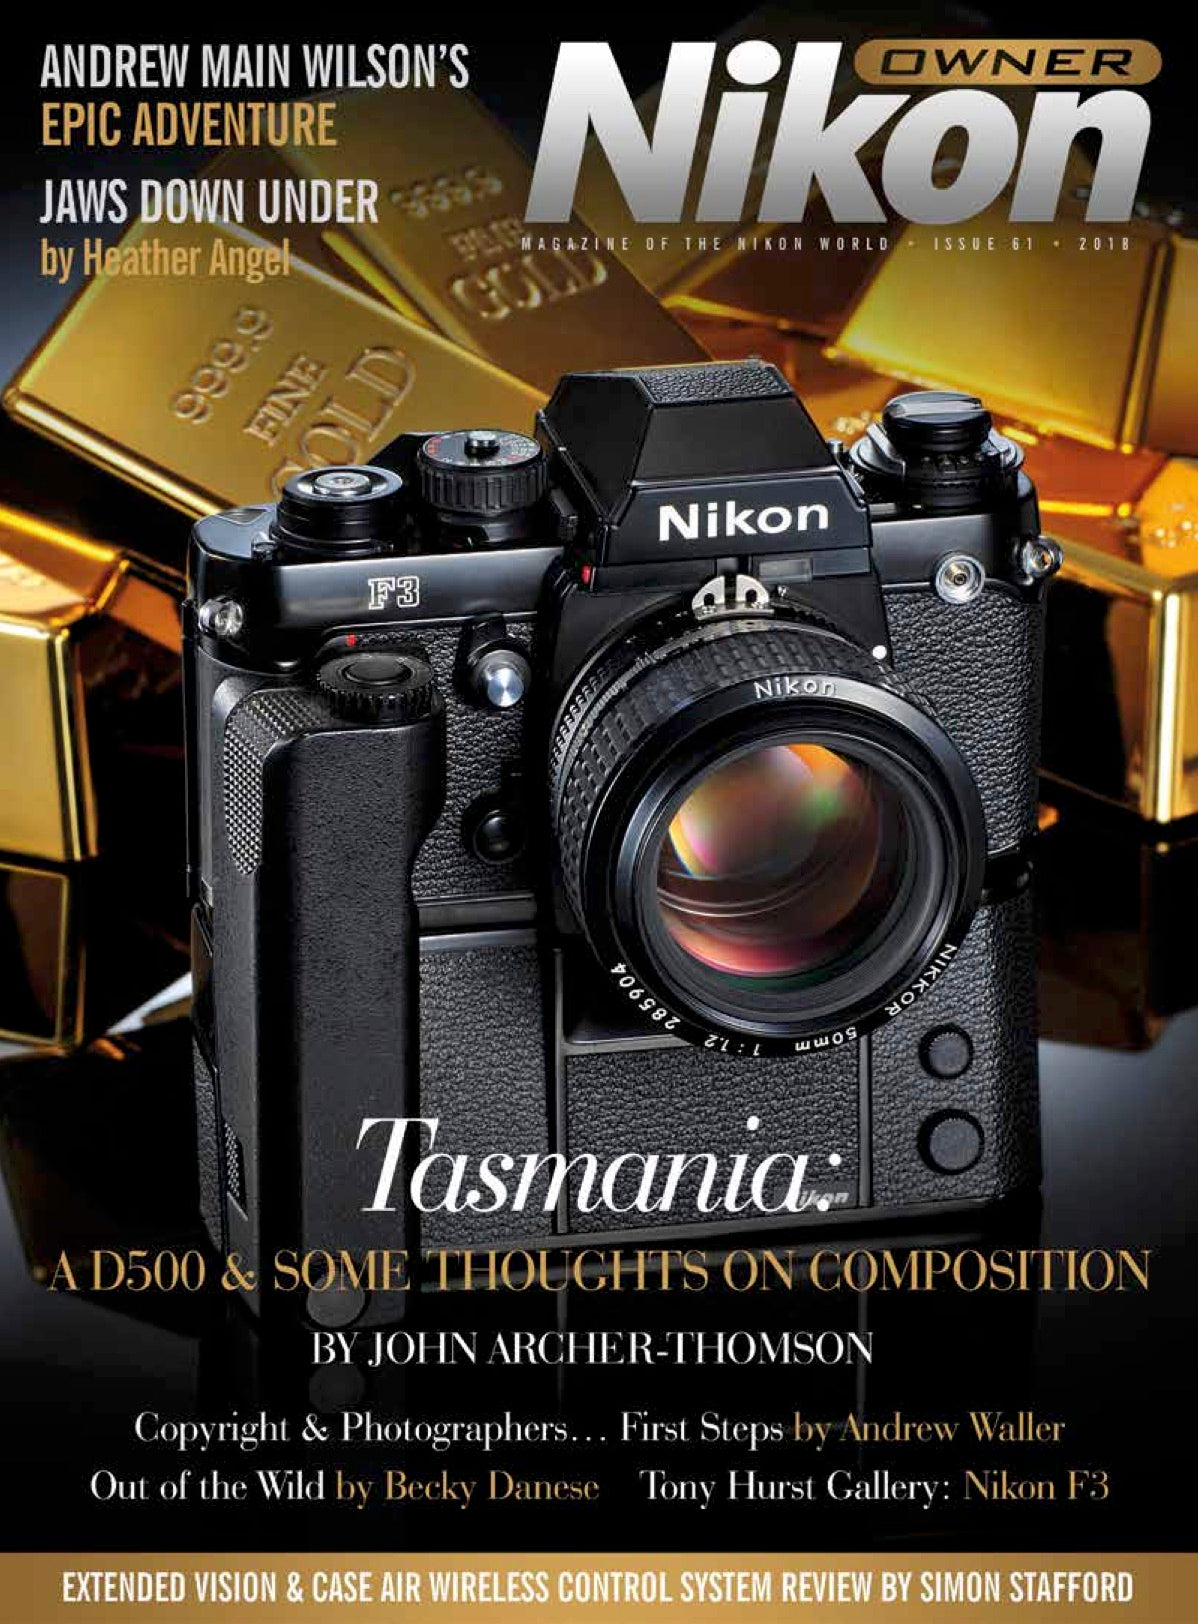 Nikon Owner Magazine issue 61